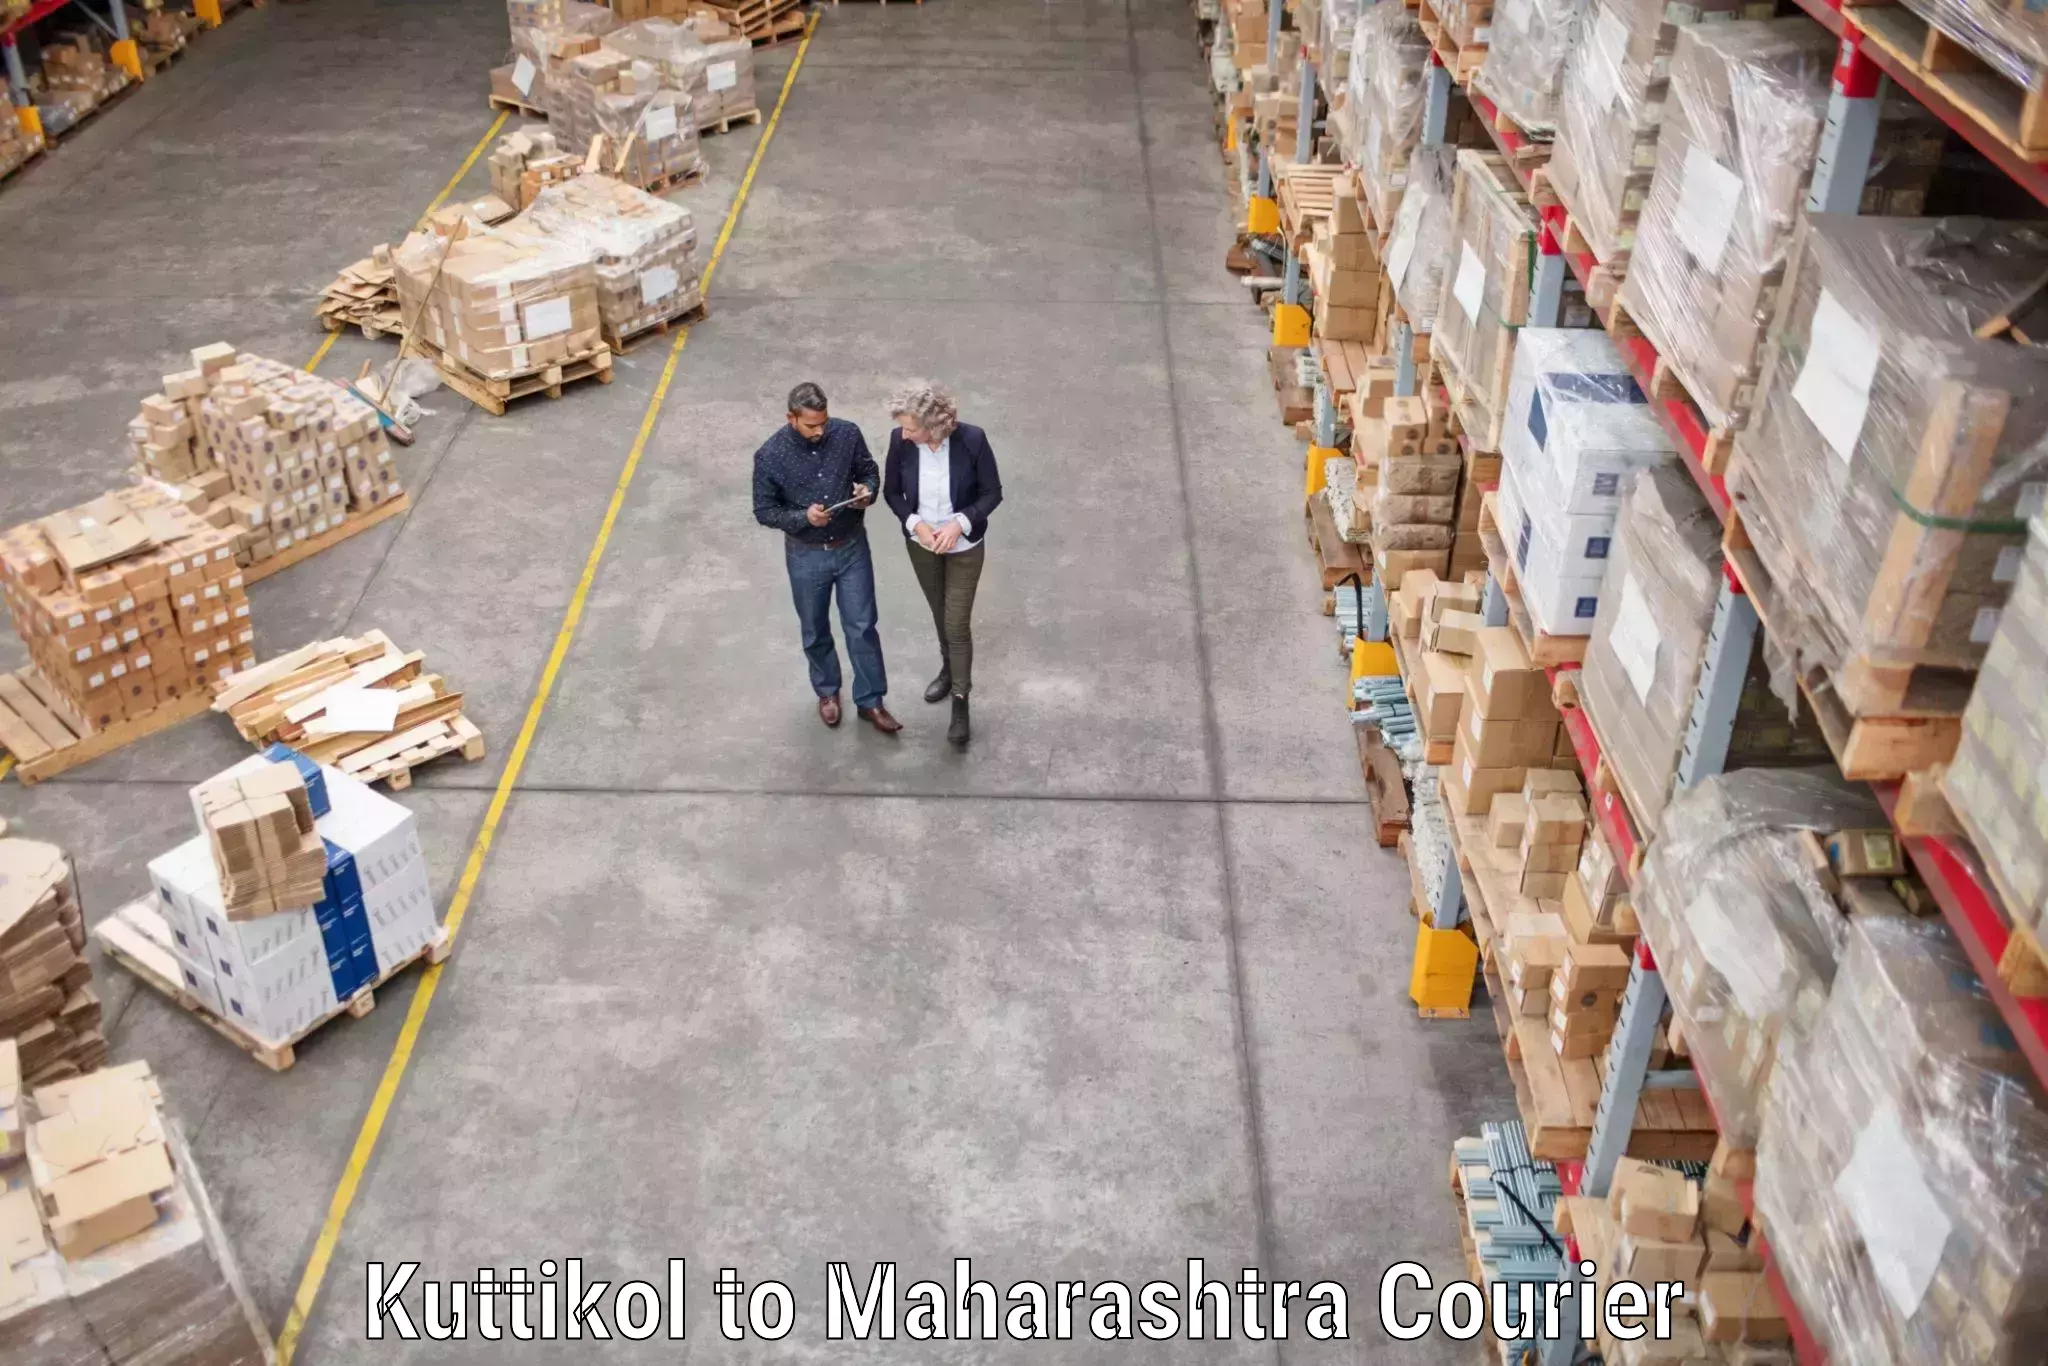 Professional movers in Kuttikol to Kannad